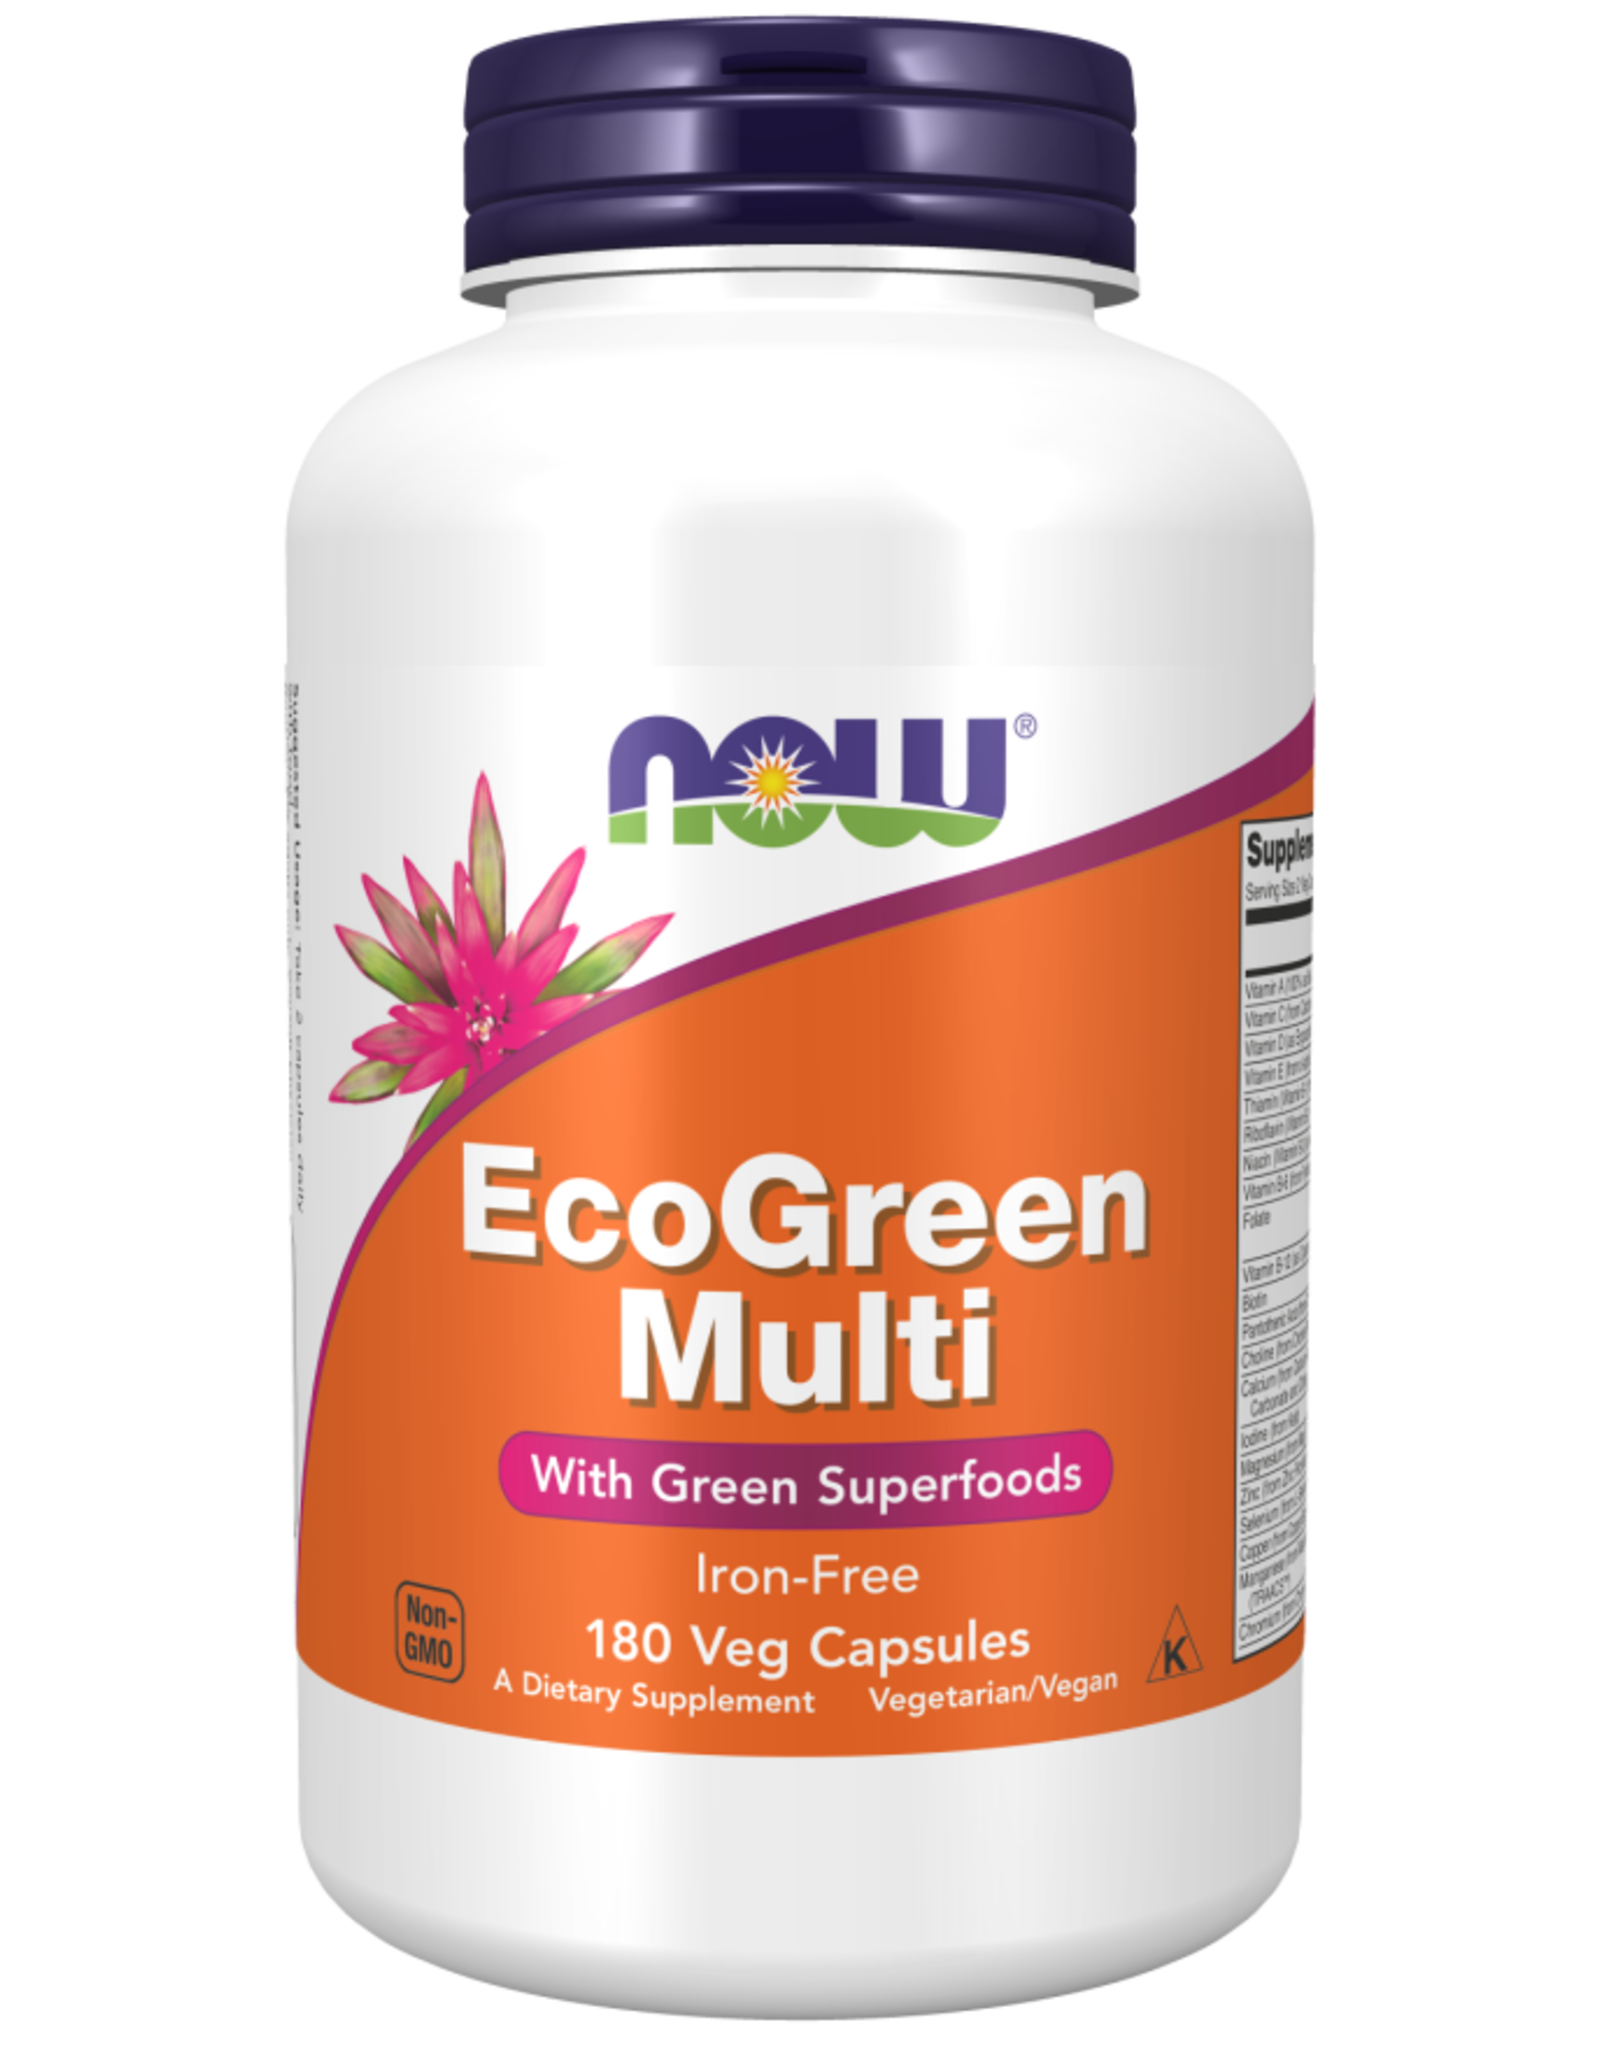 X Now EcoGreen Multi Vitamin - 180 Veg Capsules